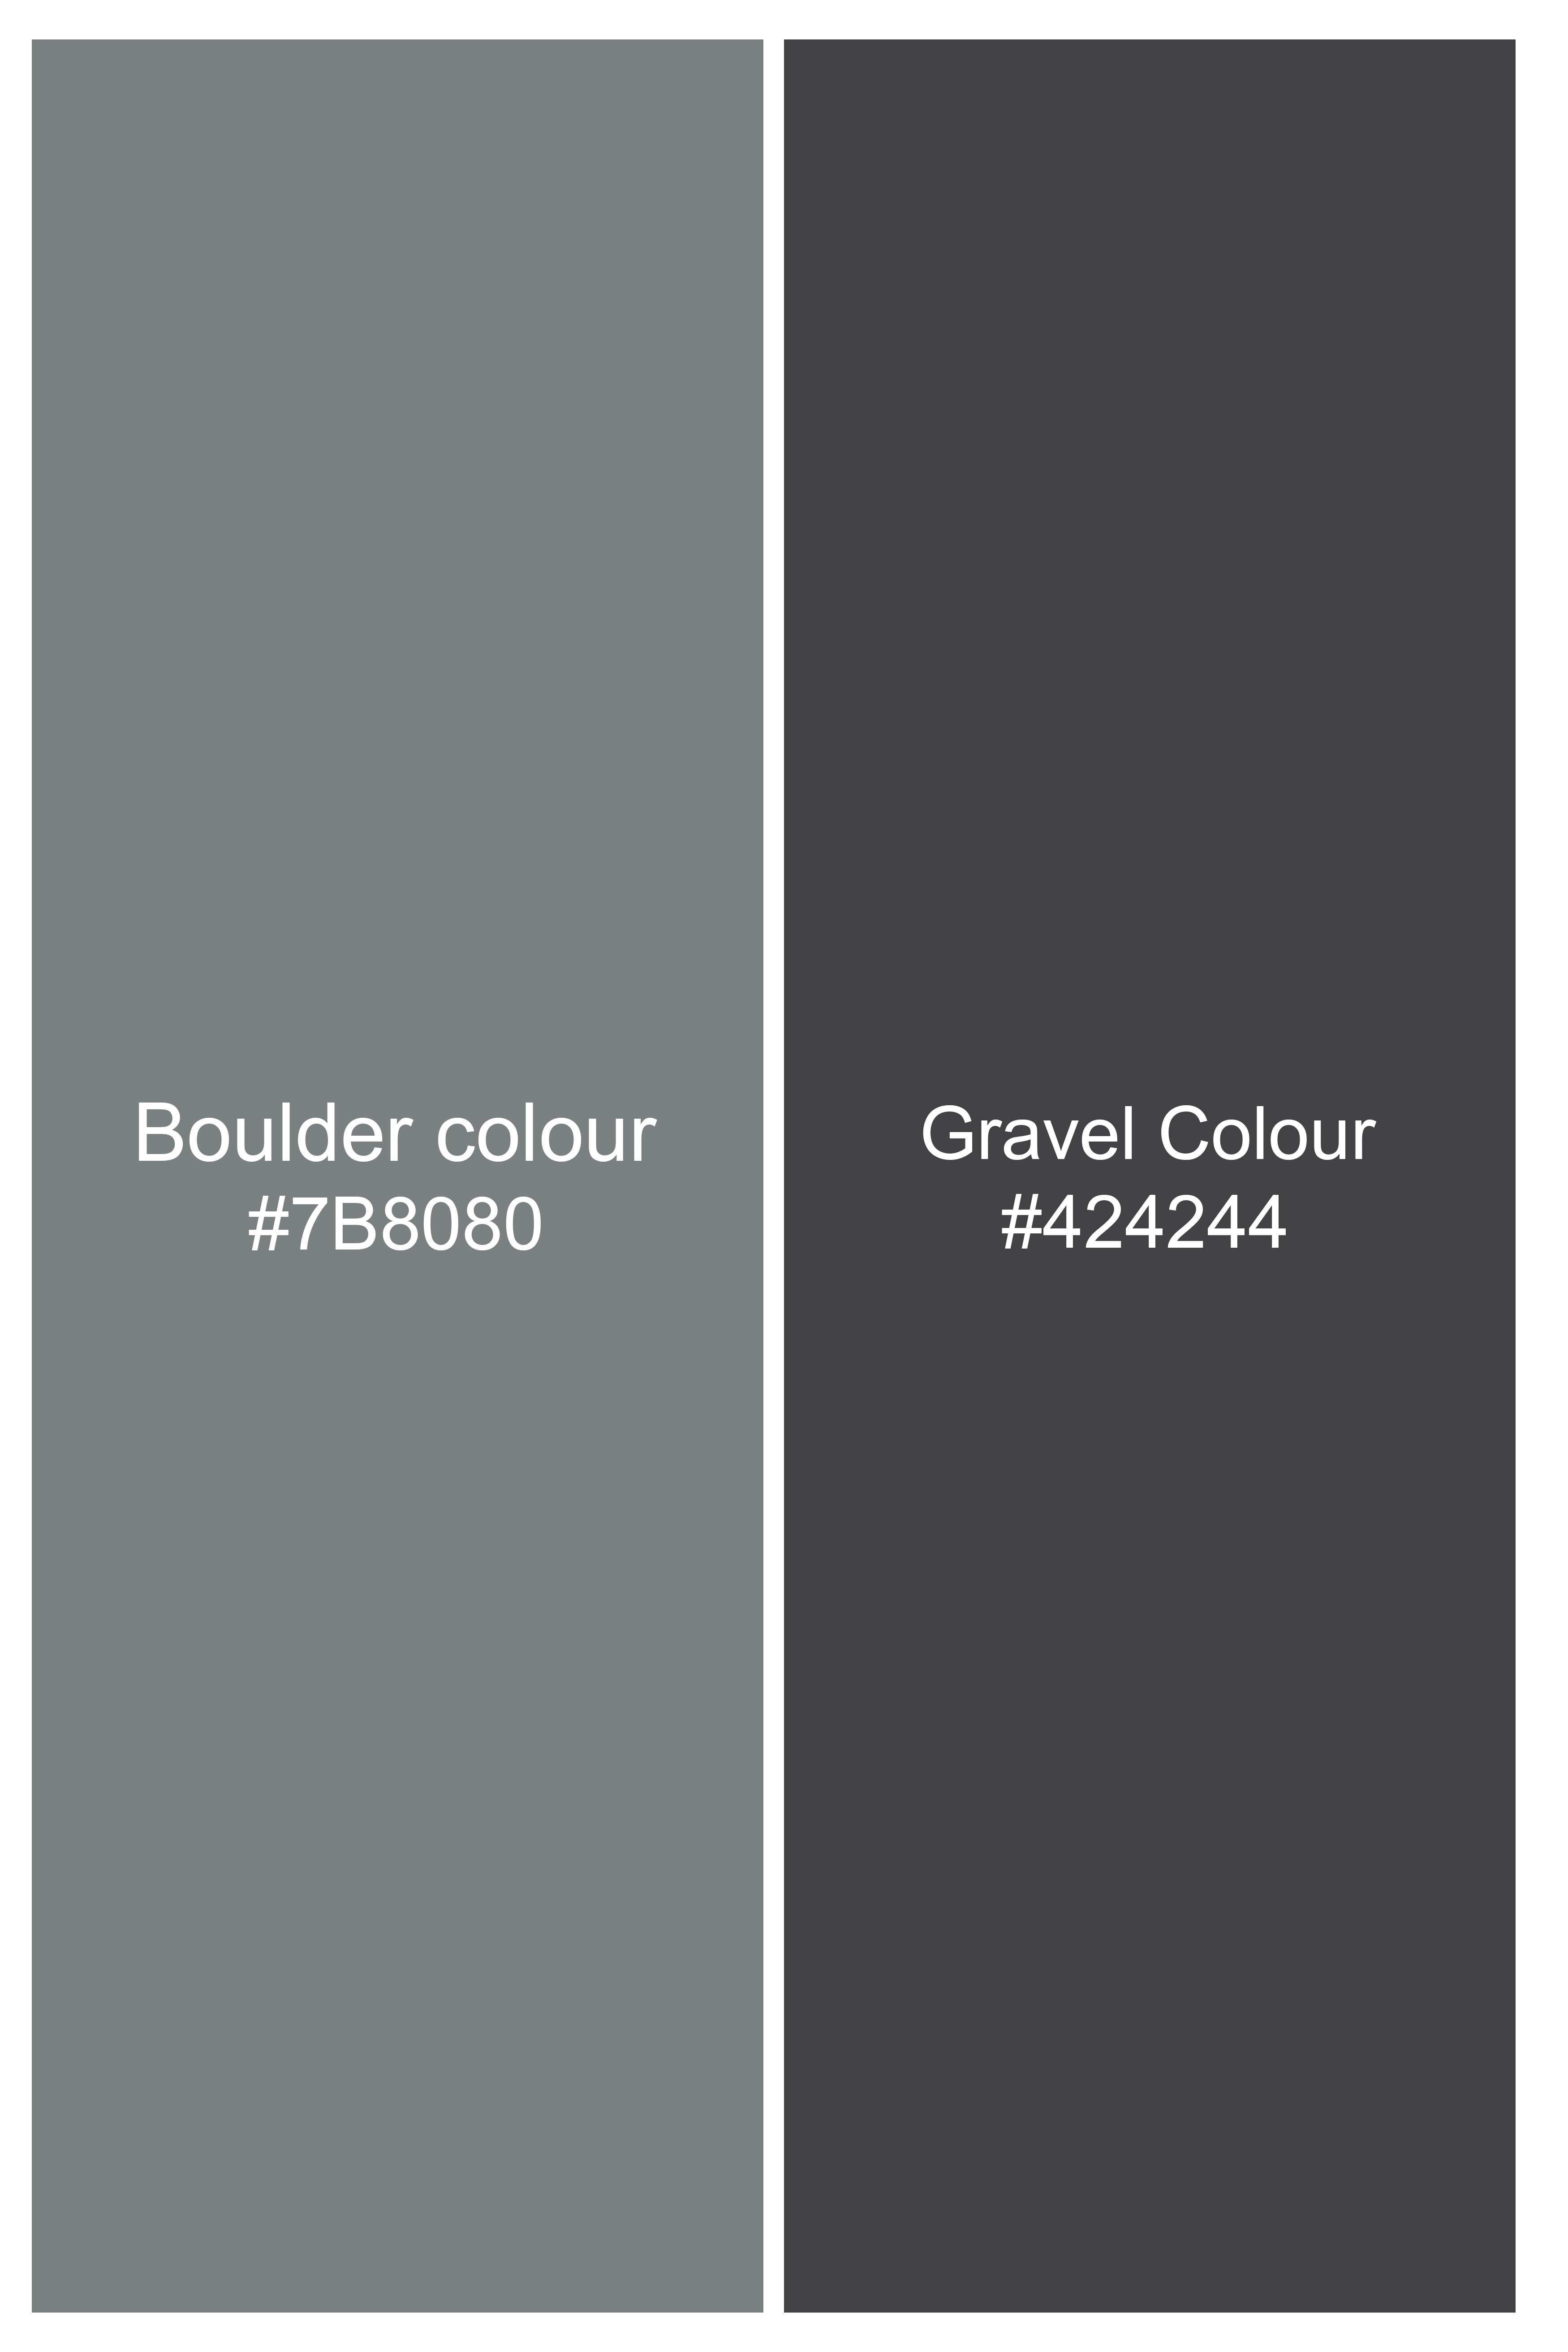 Boulder Gray Checkered Wool Rich Waistcoat V2930-36, V2930-38, V2930-40, V2930-42, V2930-44, V2930-46, V2930-48, V2930-50, V2930-30, V2930-54, V2930-56, V2930-58, V2930-60